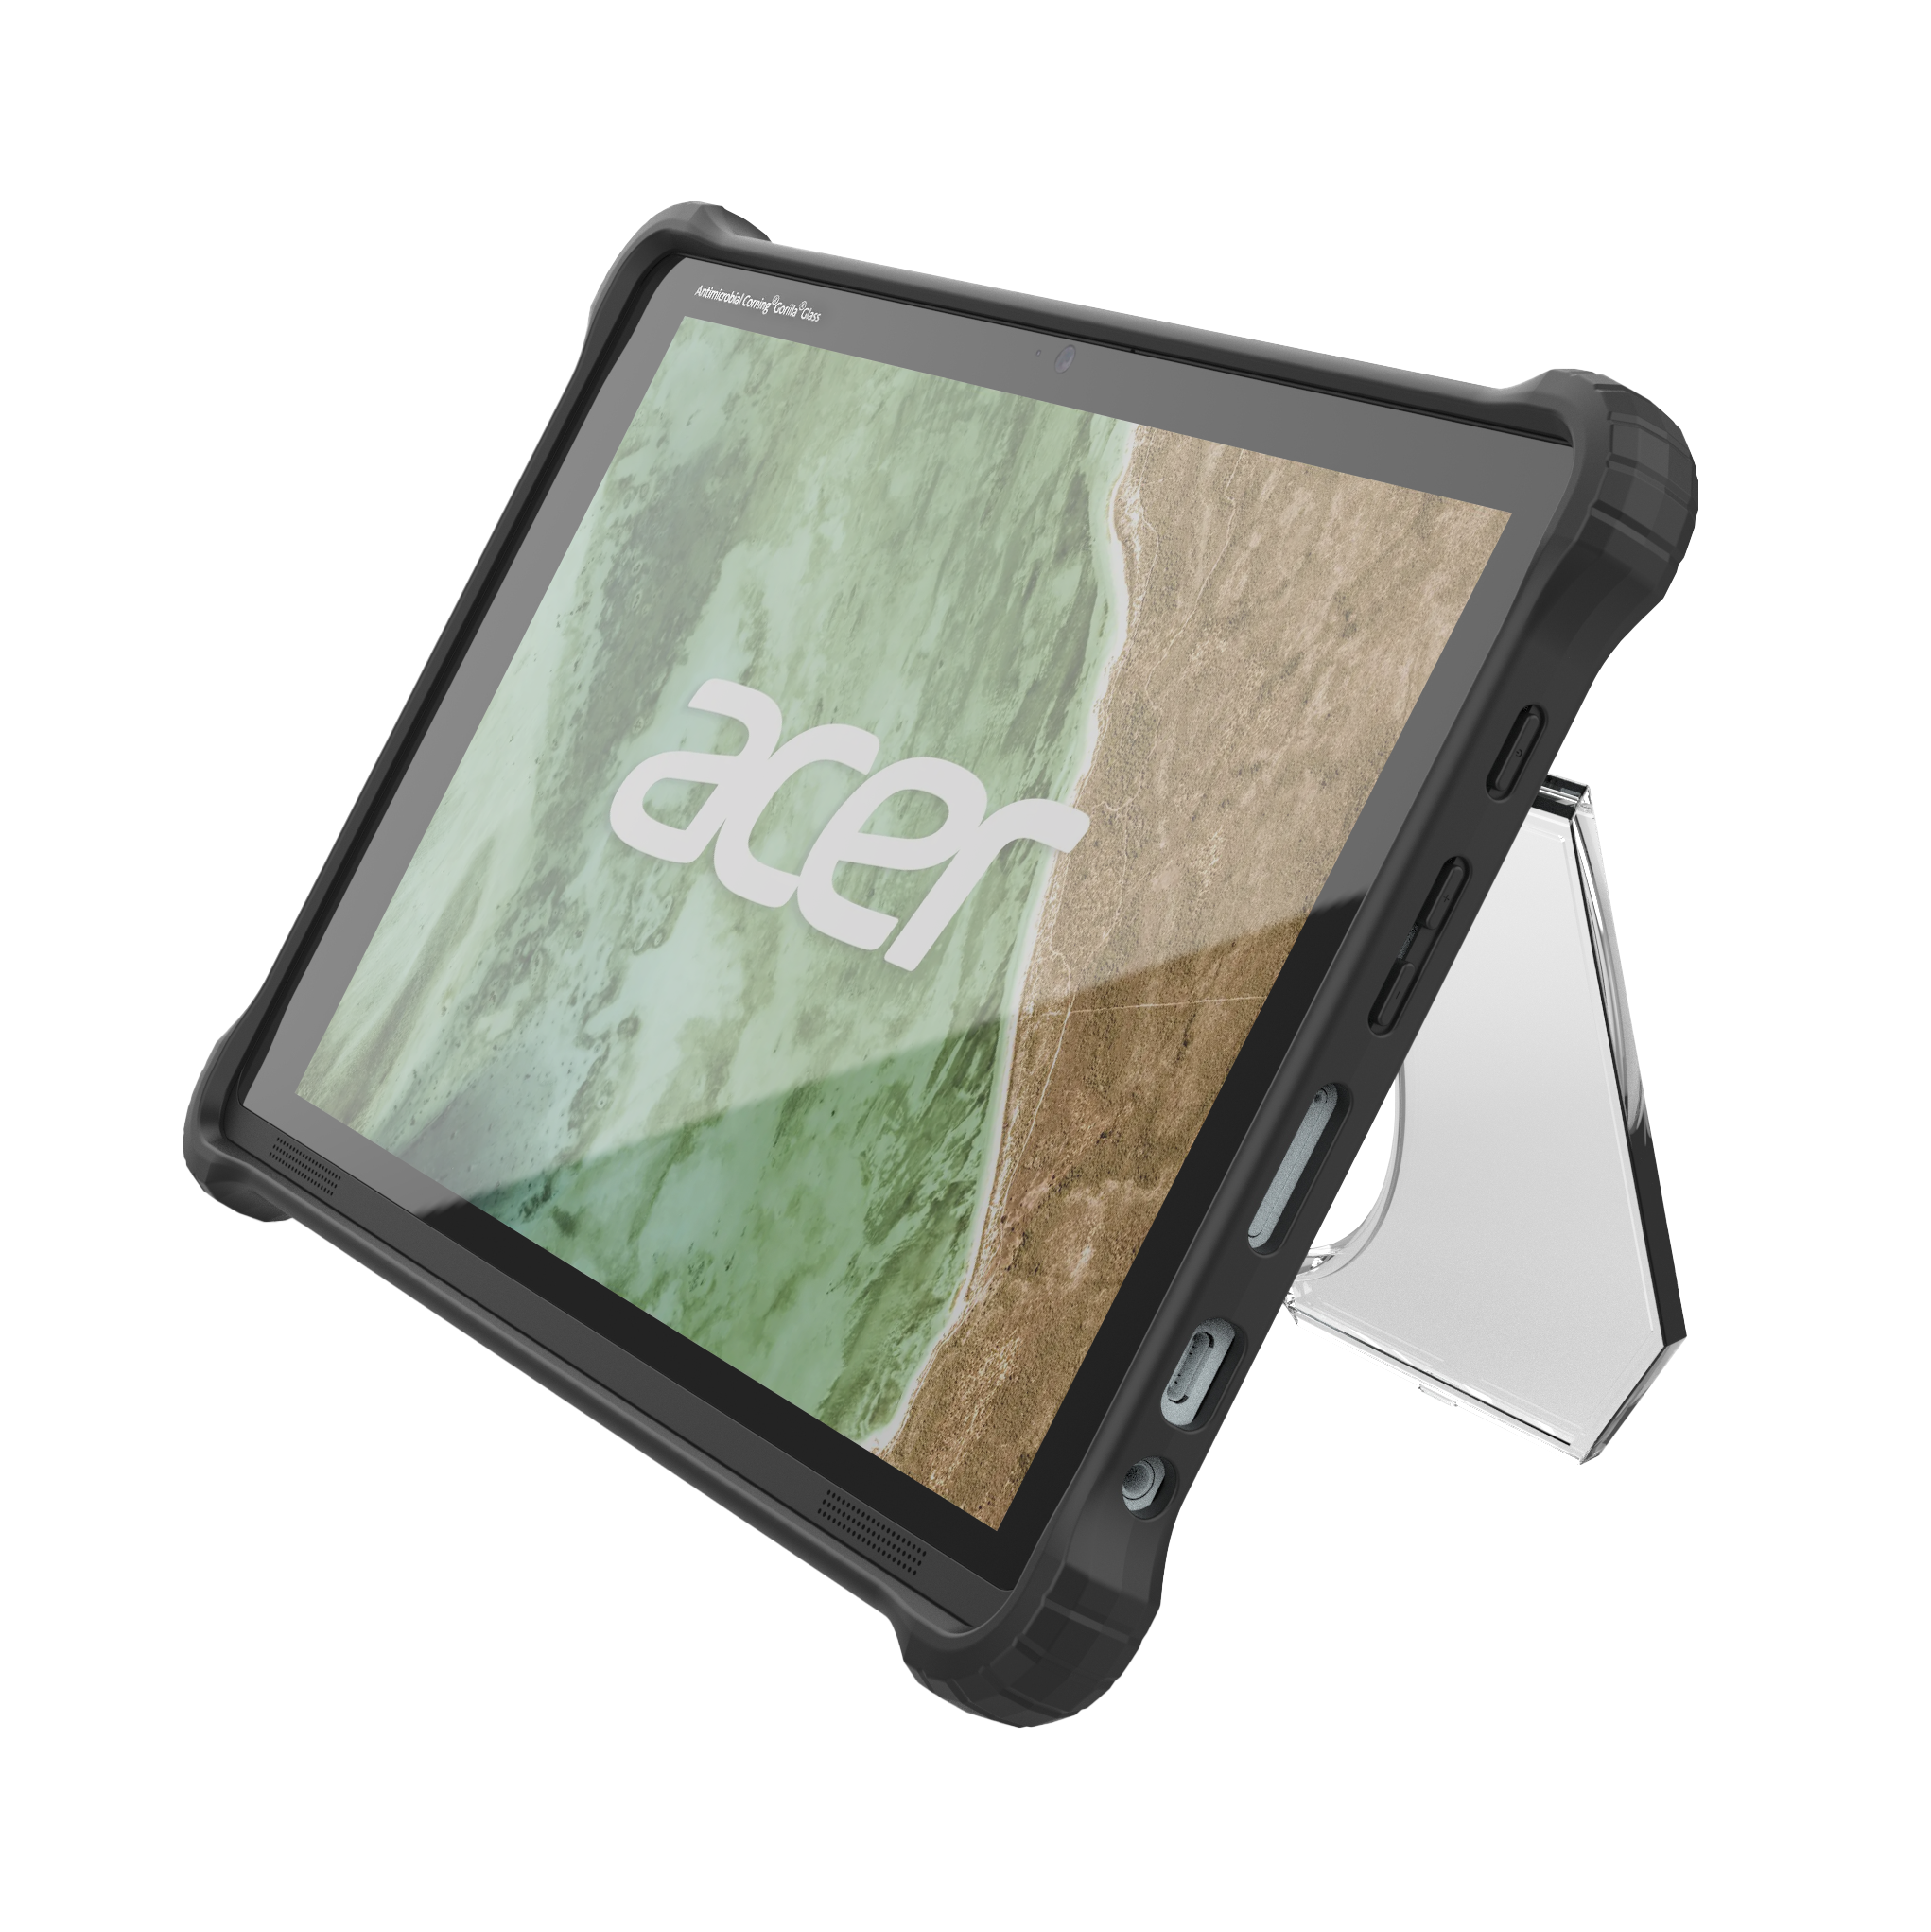 Acer 510 (D652N) Rugged Snap-On Case